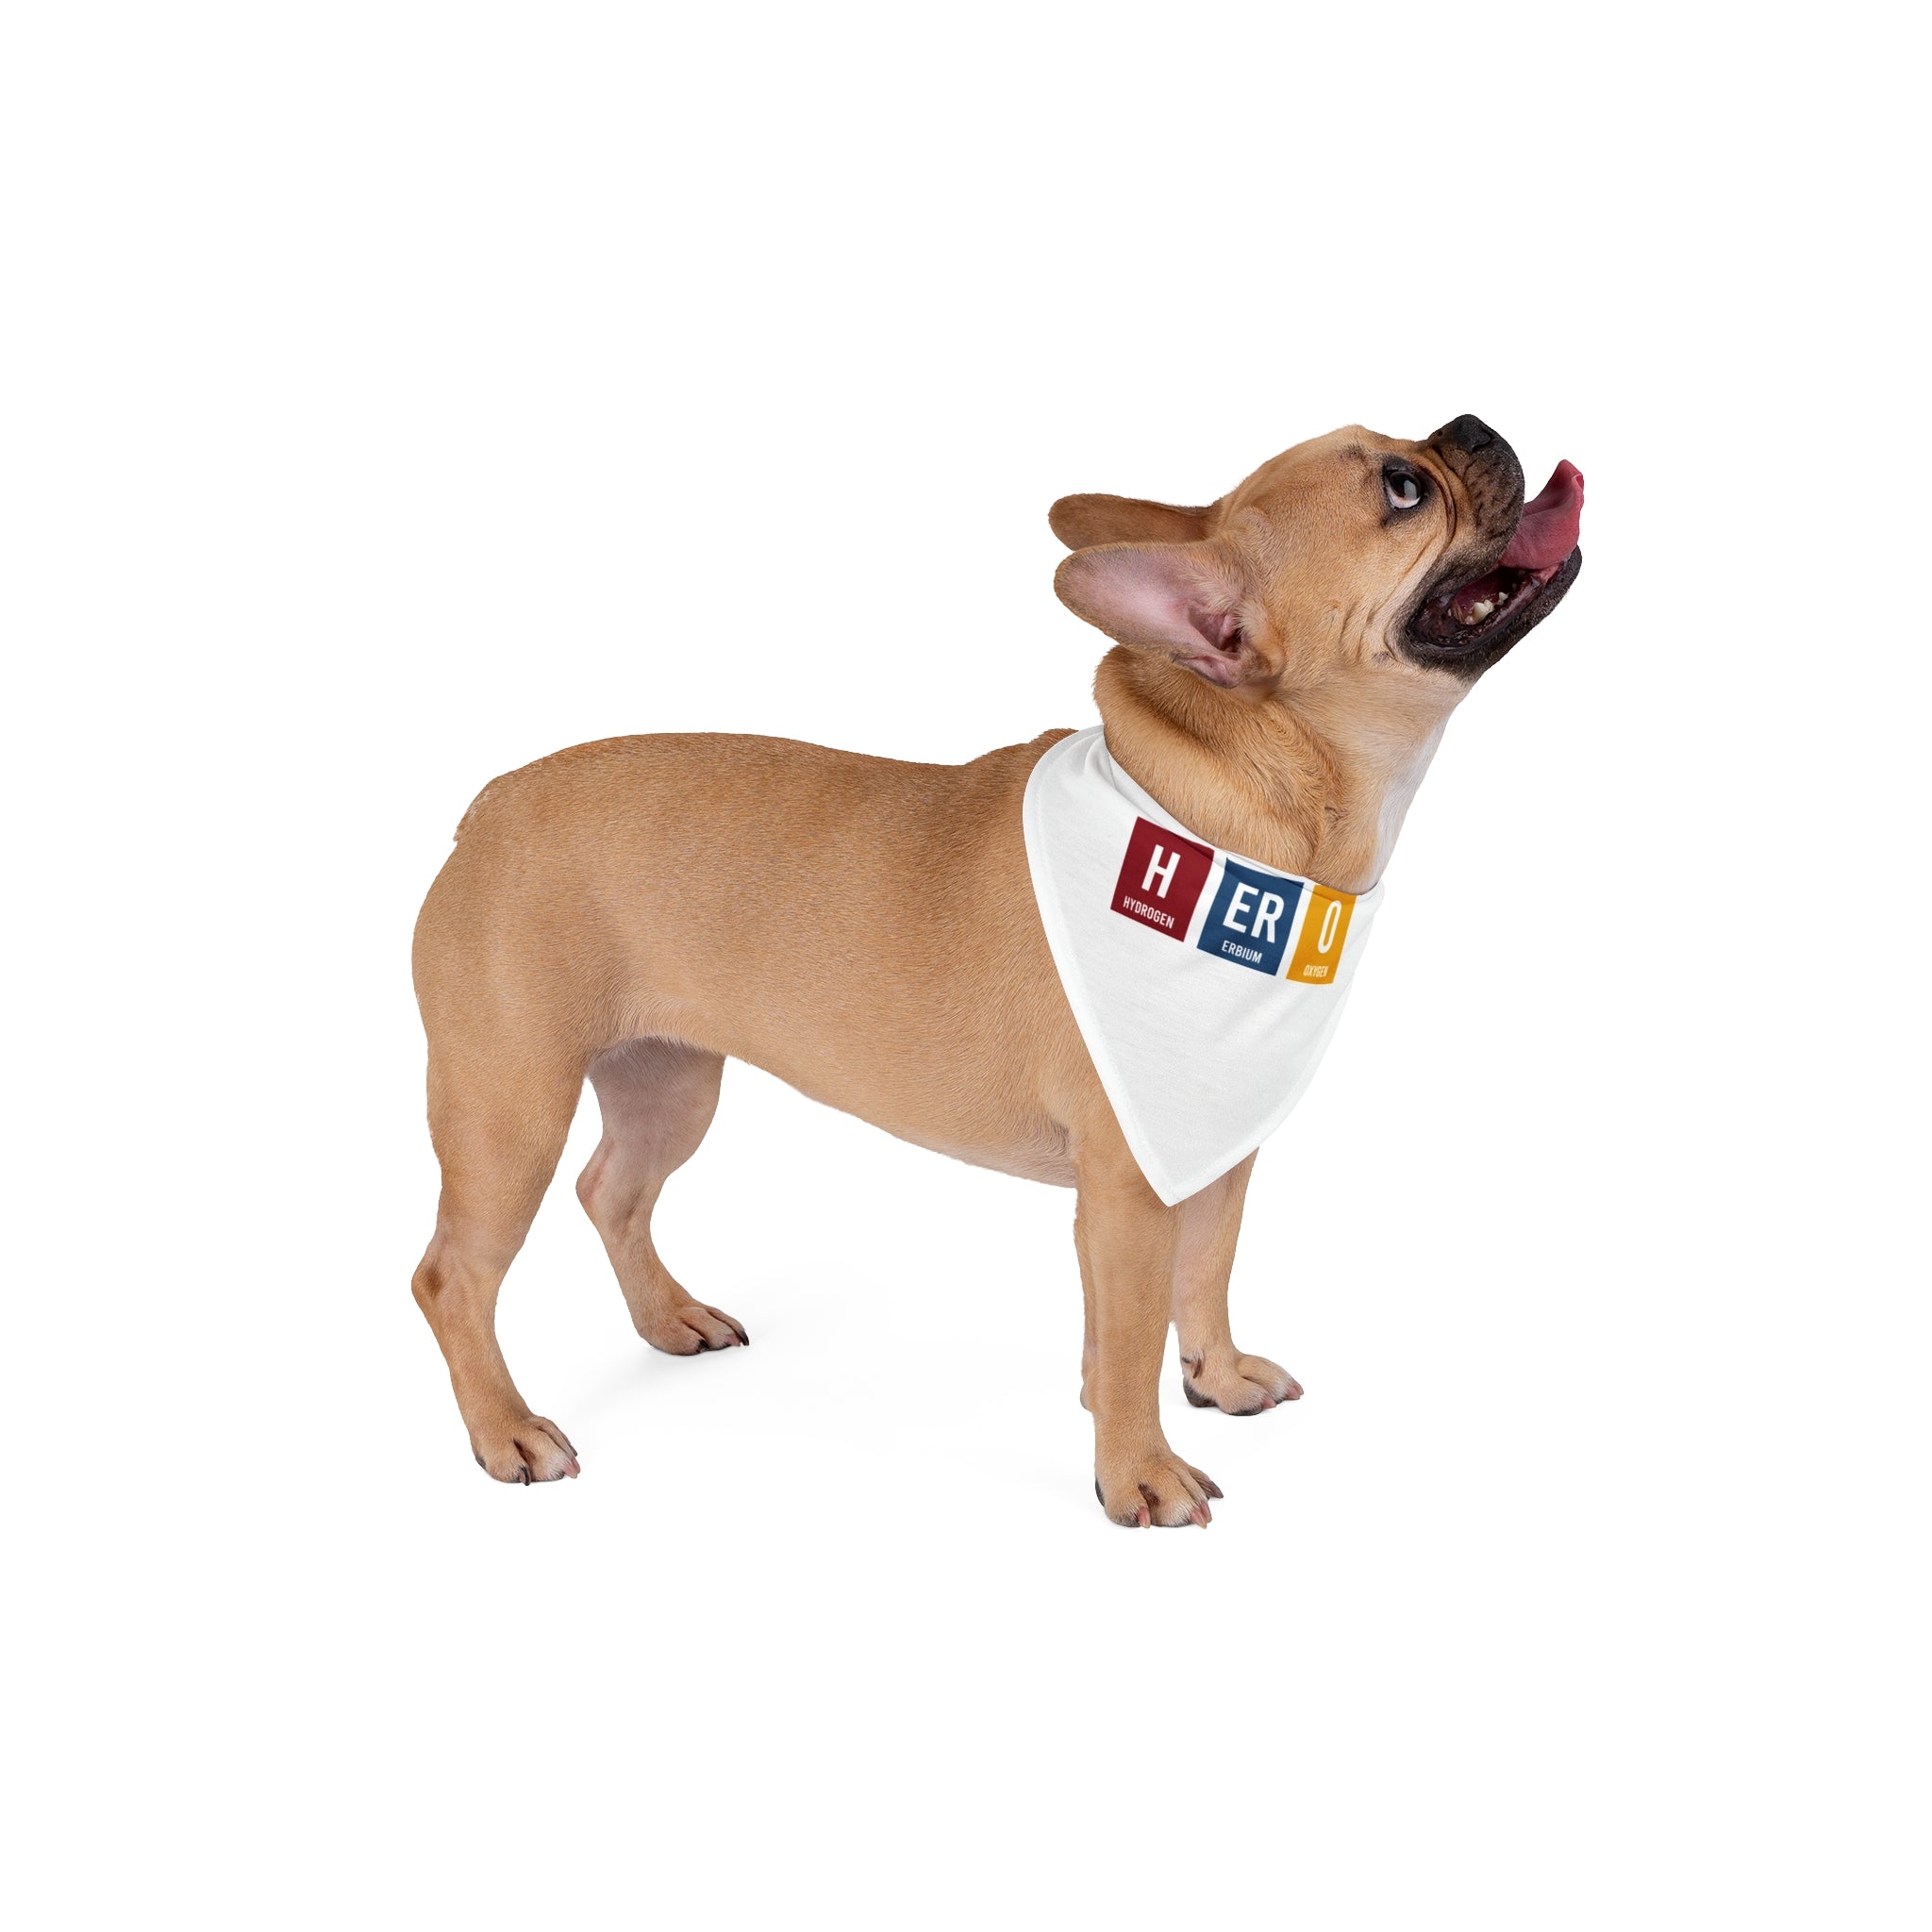 A small brown French Bulldog wearing a stylish HERO - Pet Bandana made from soft-spun polyester looks upward with its tongue out.